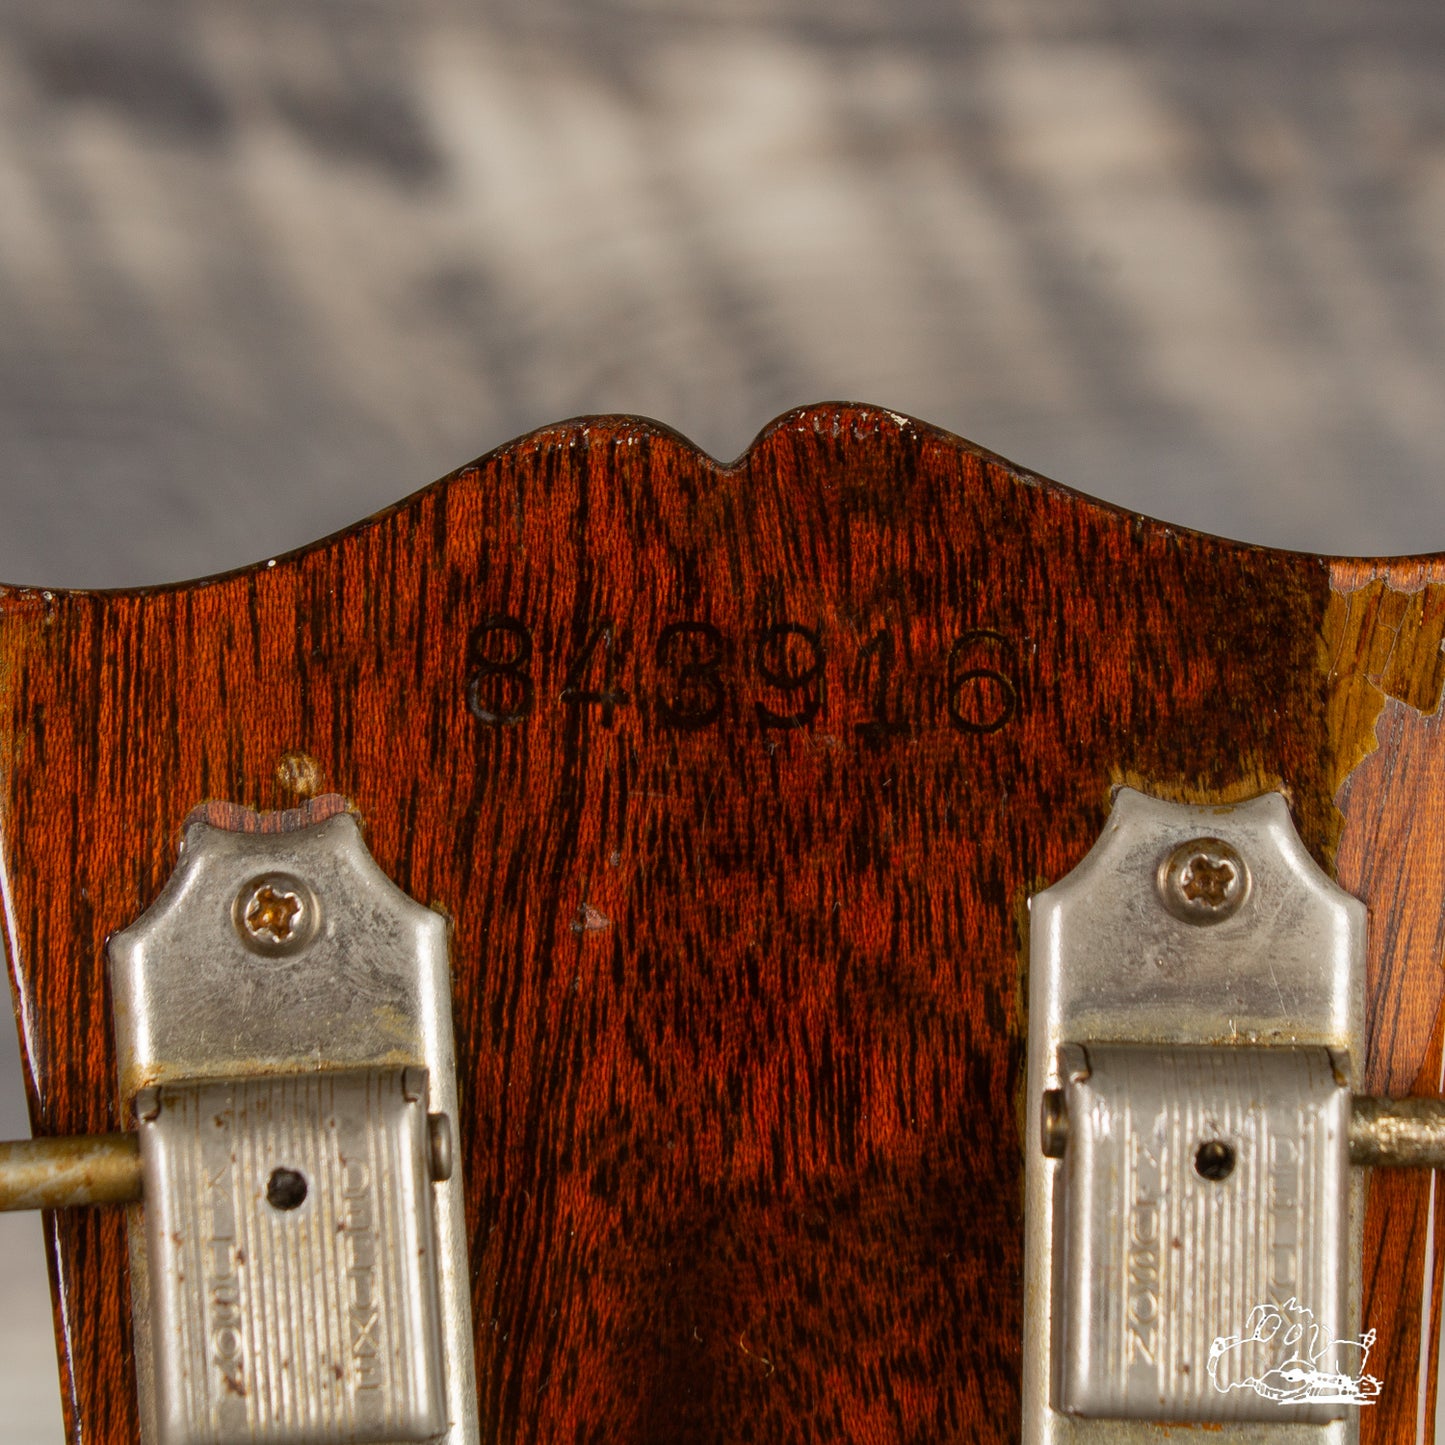 1968 Gibson J-50